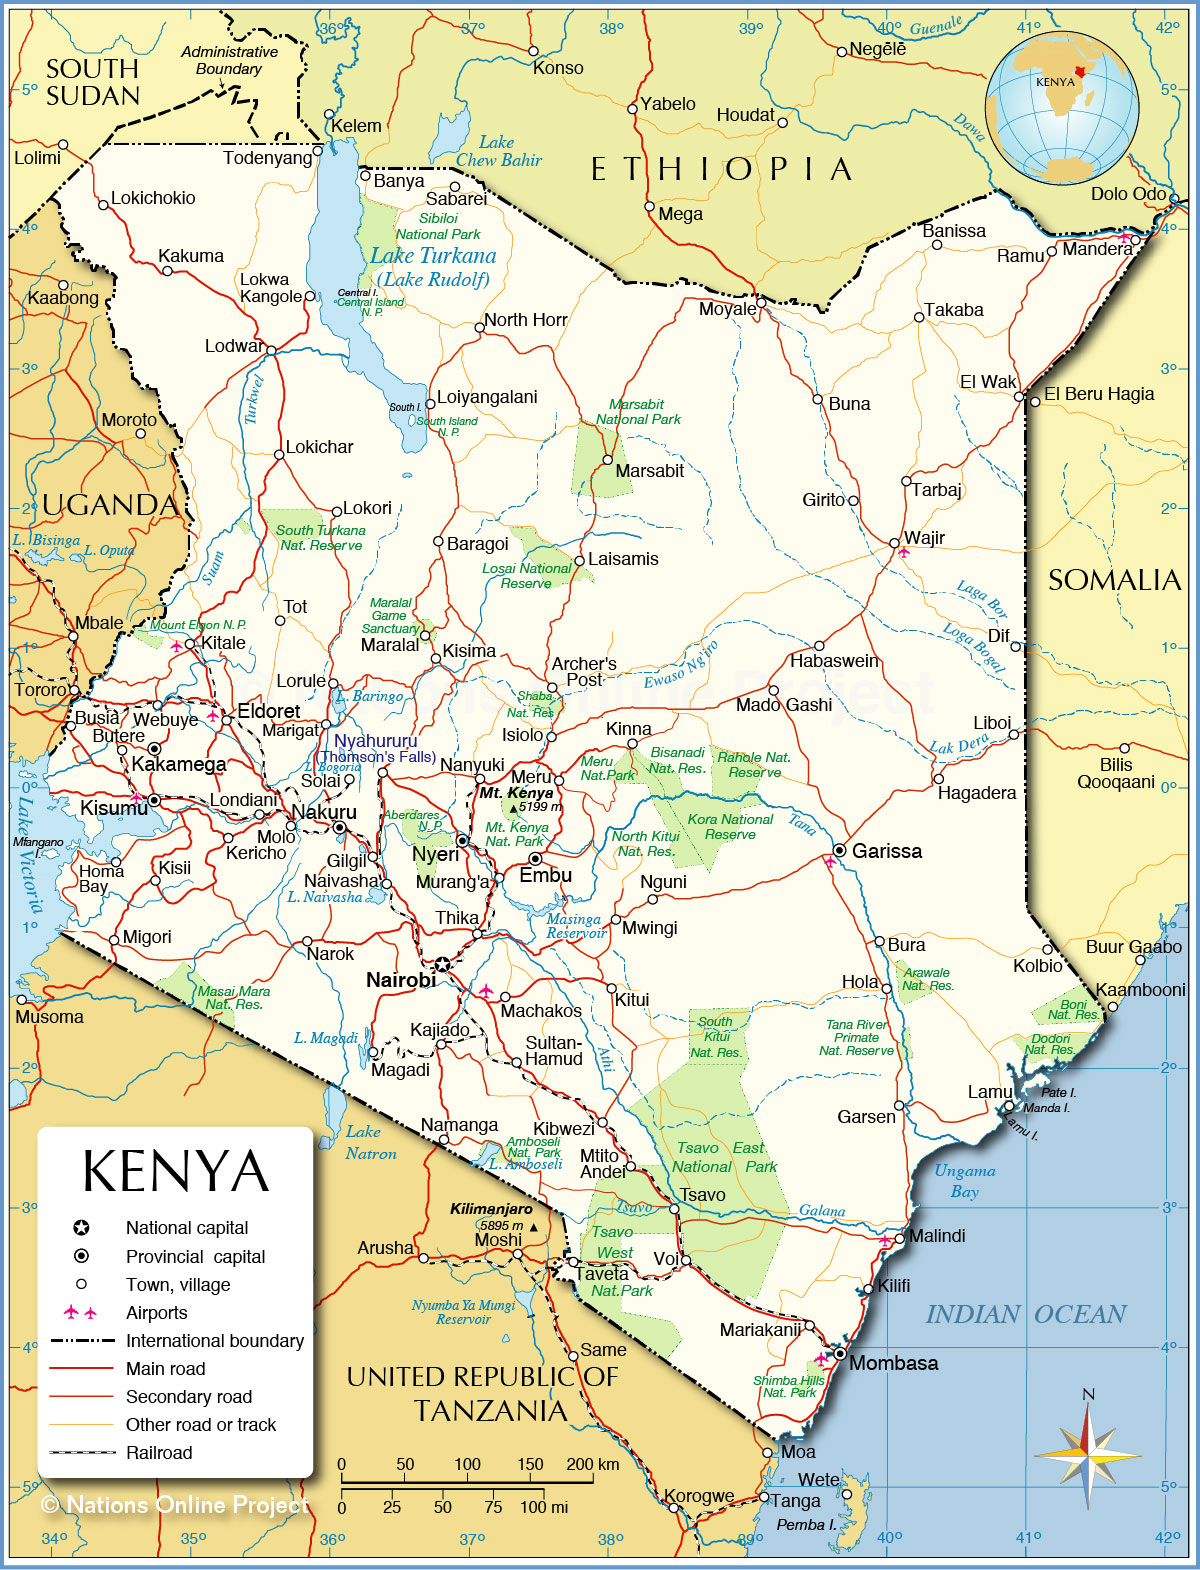 Map Of Kenya Counties And Towns - Bobbie Stefanie